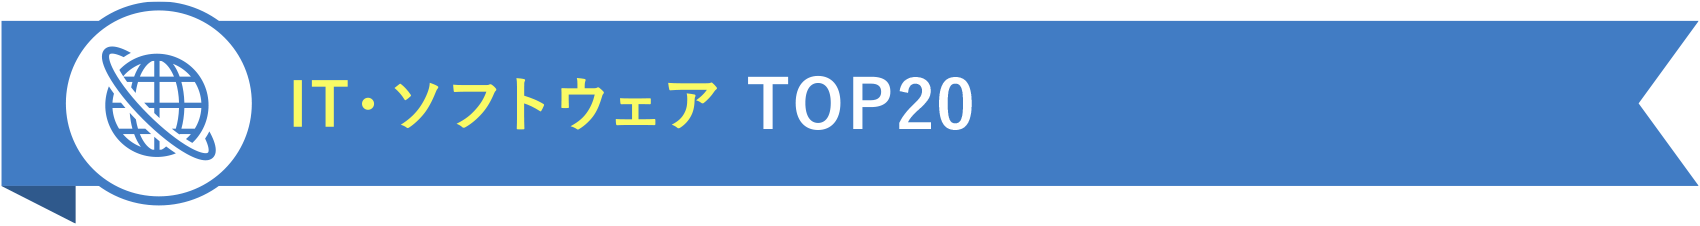 IT・ソフトウェア TOP20